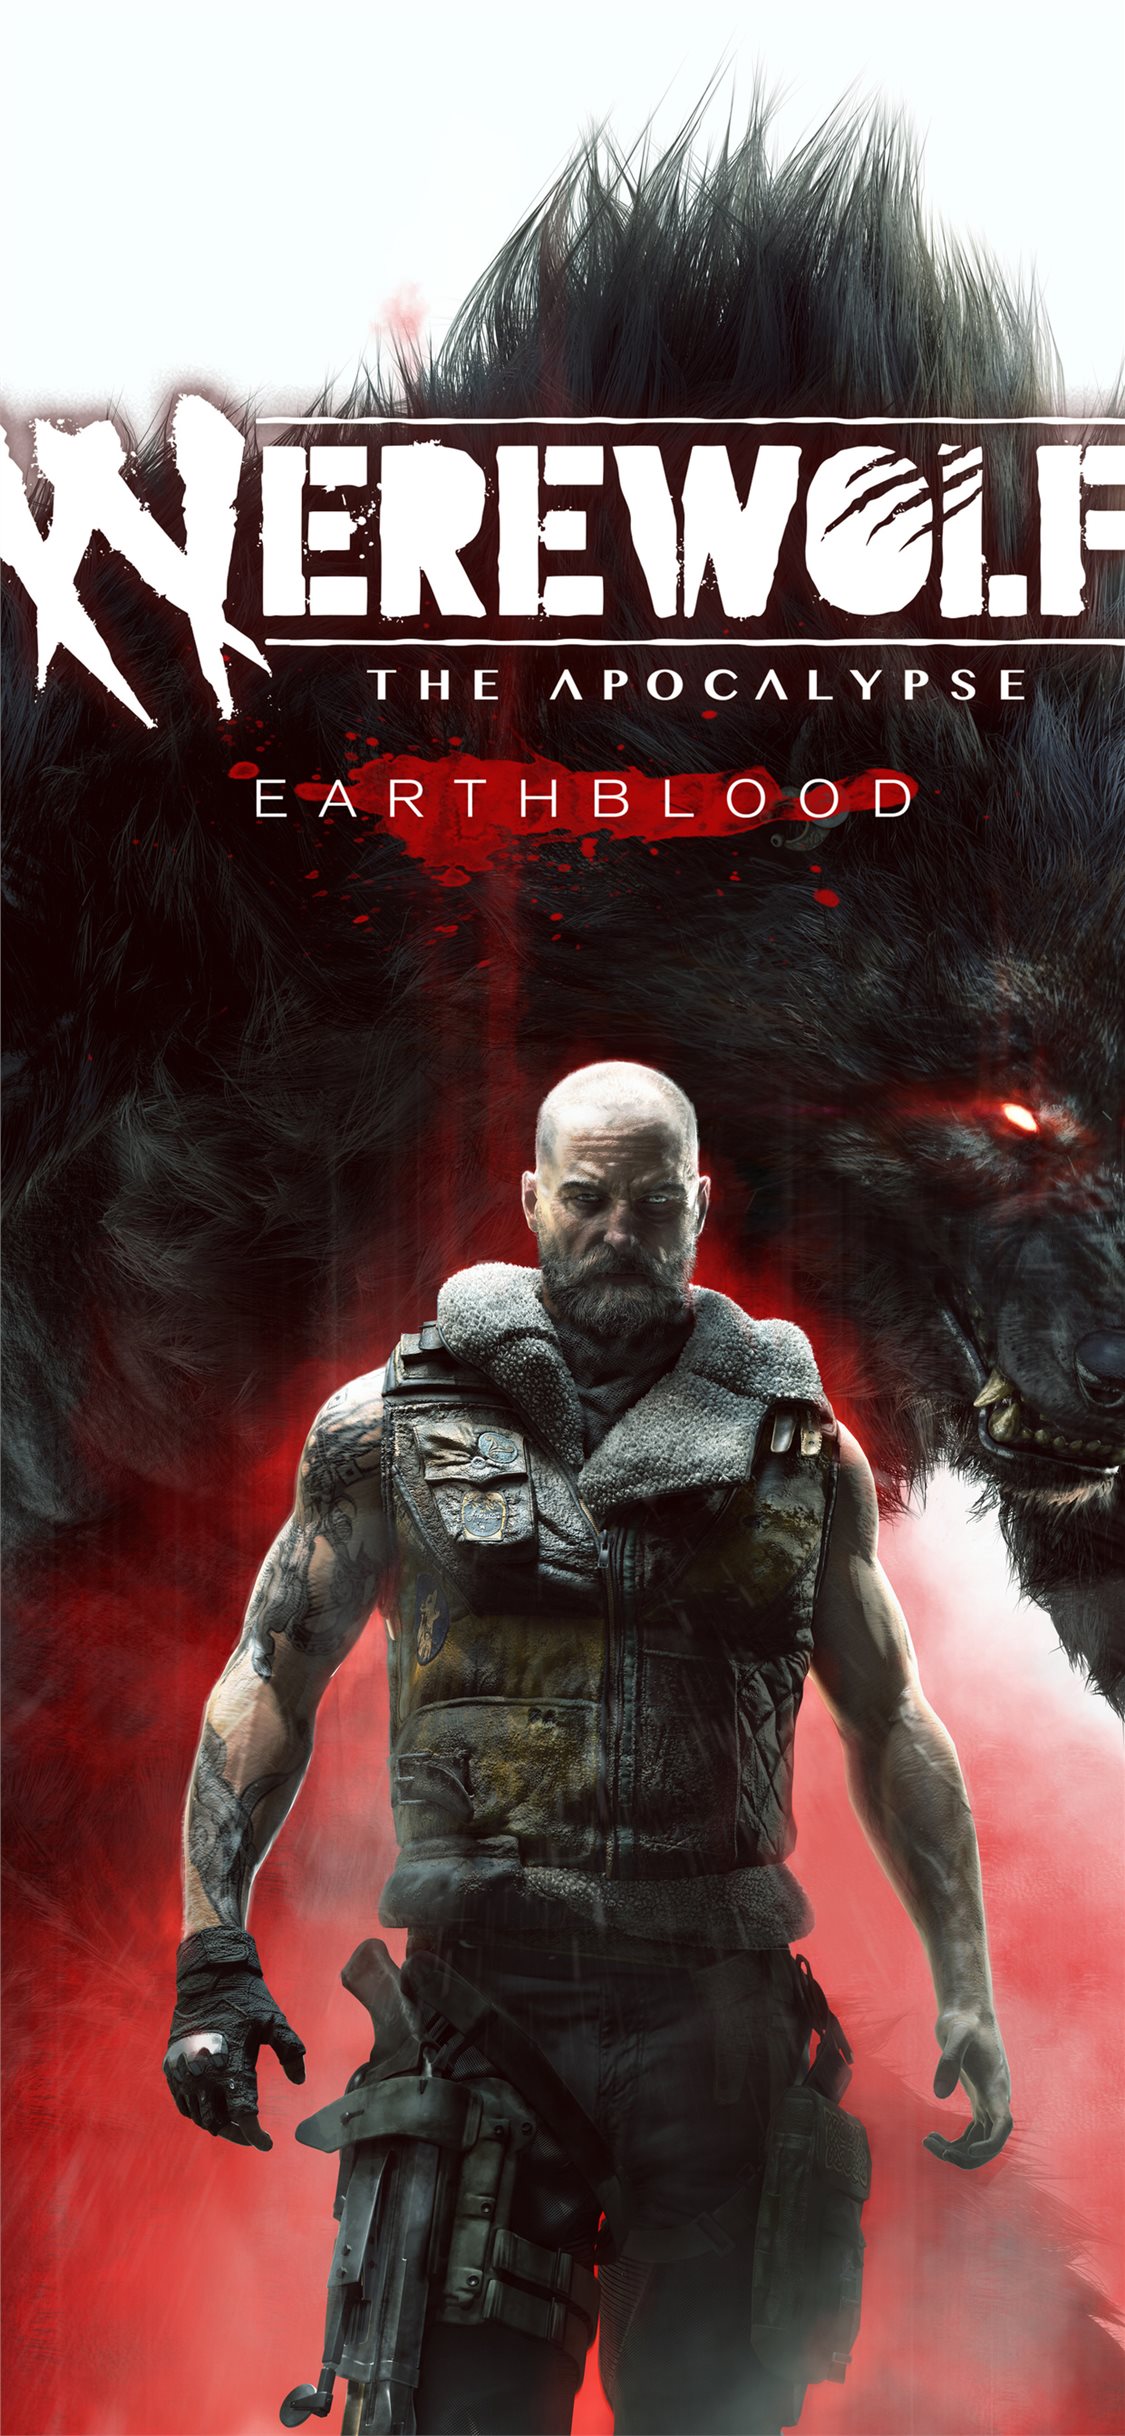 werewolf the apocalypse earthblood 2020 4k iPhone X Wallpapers 1125x2436